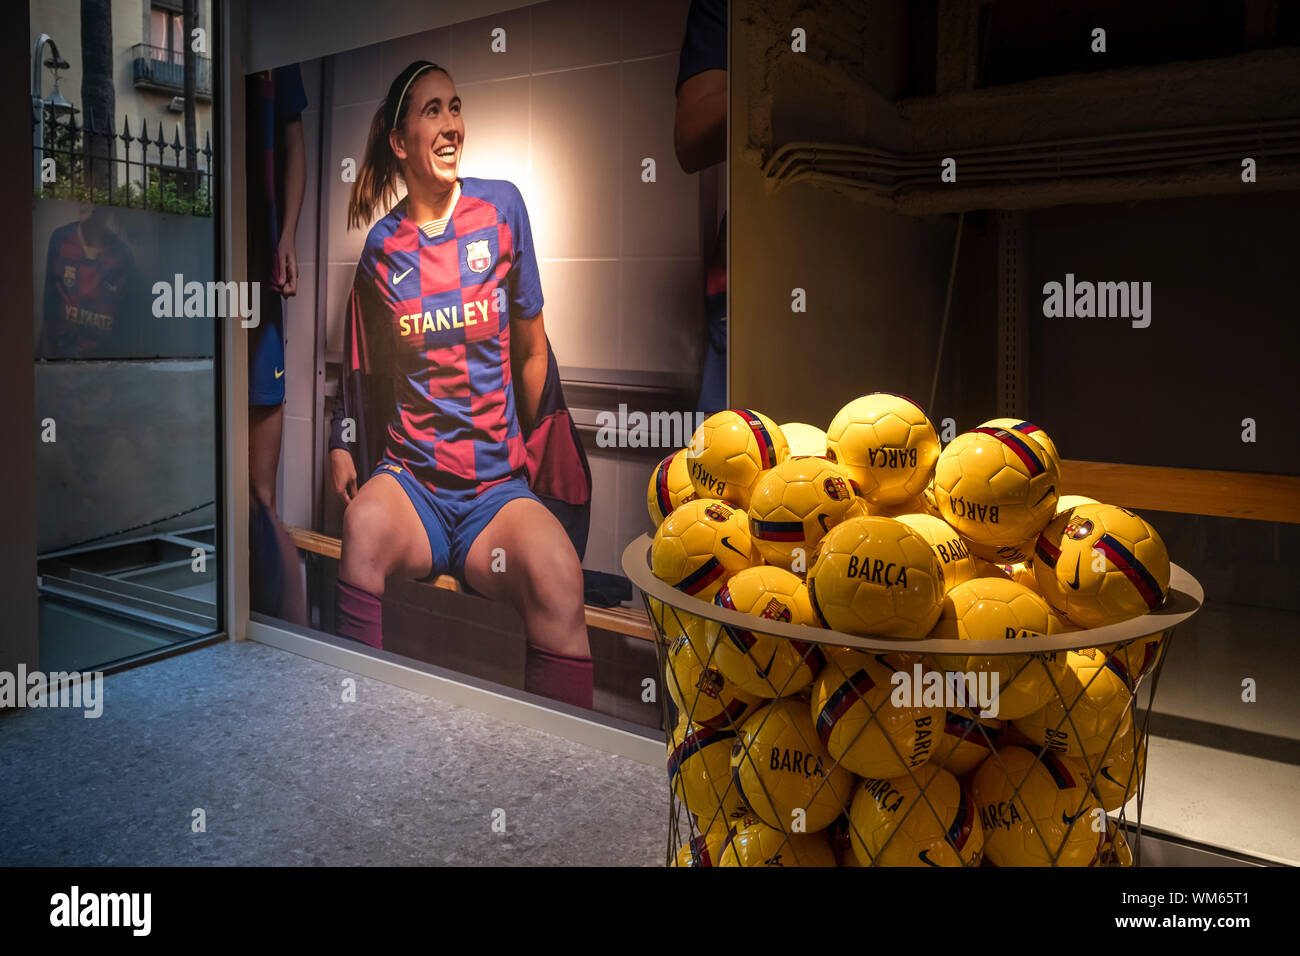 Fc barcelona femenino fotografías e imágenes de alta resolución - Alamy